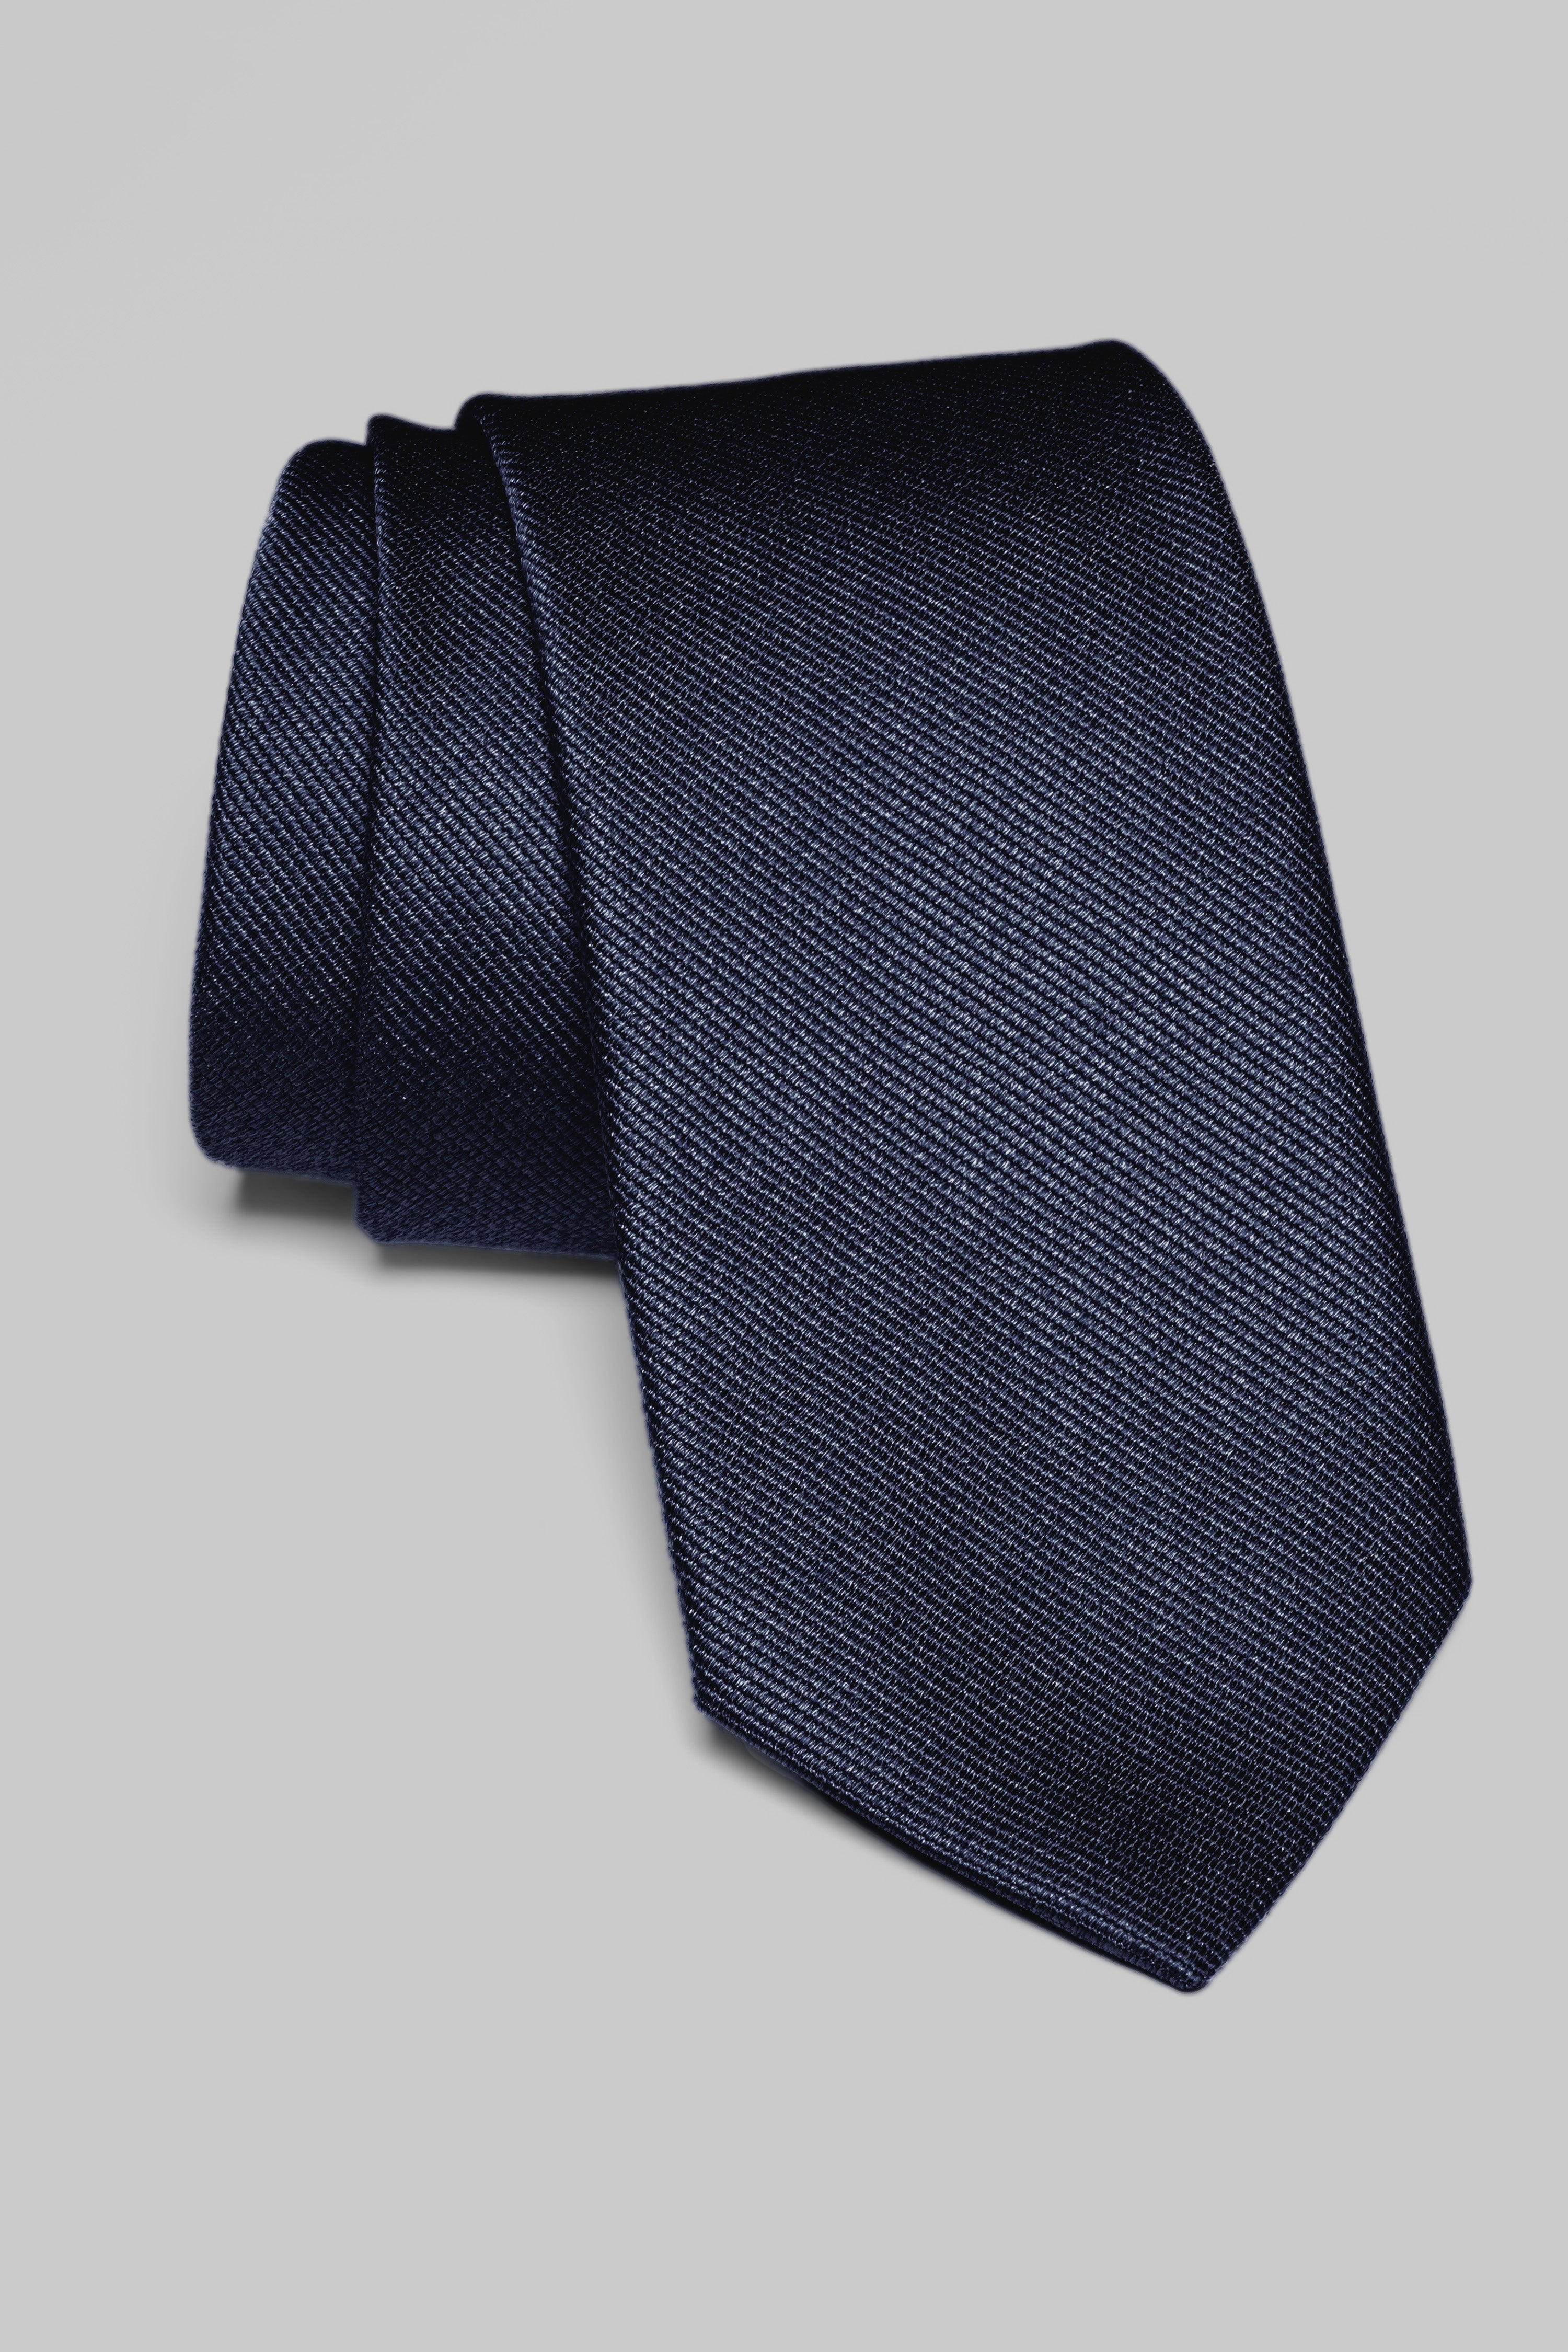 Vue alternative Cravate Tissée Unie Marine Bowman